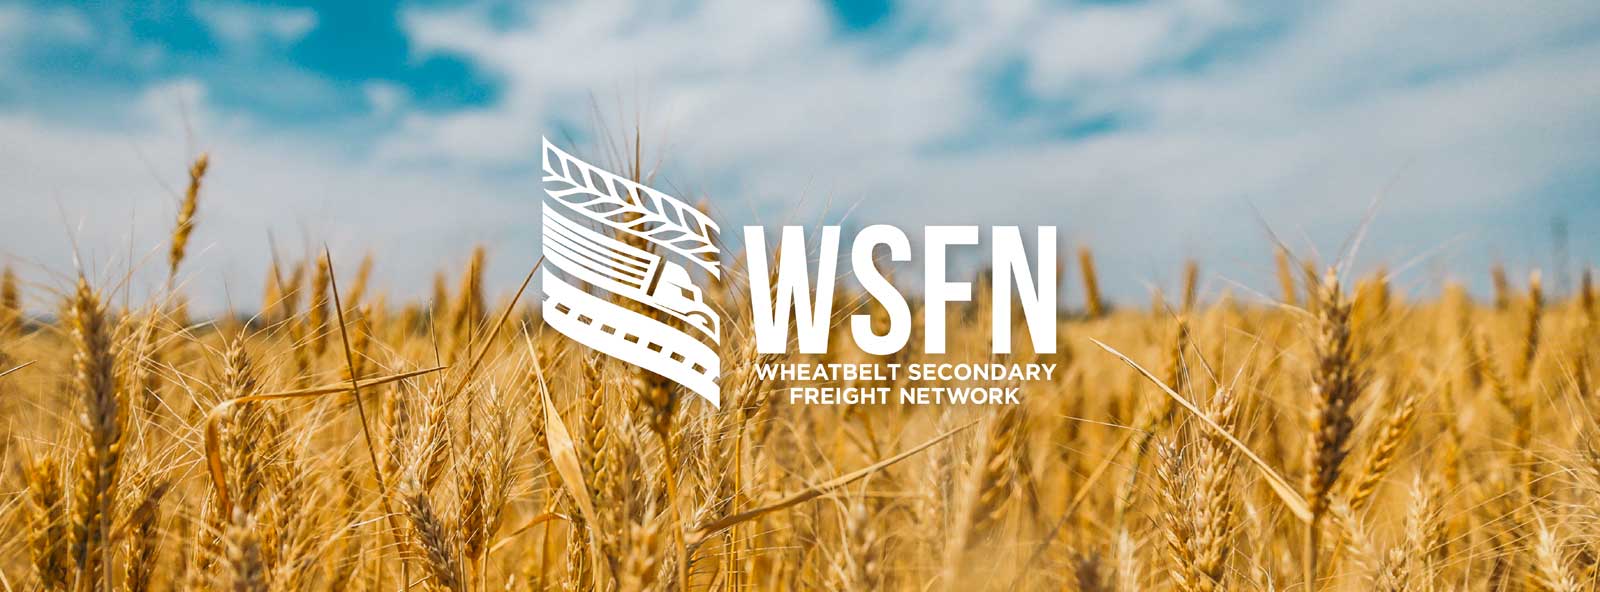 client WSFN-logo-design-project